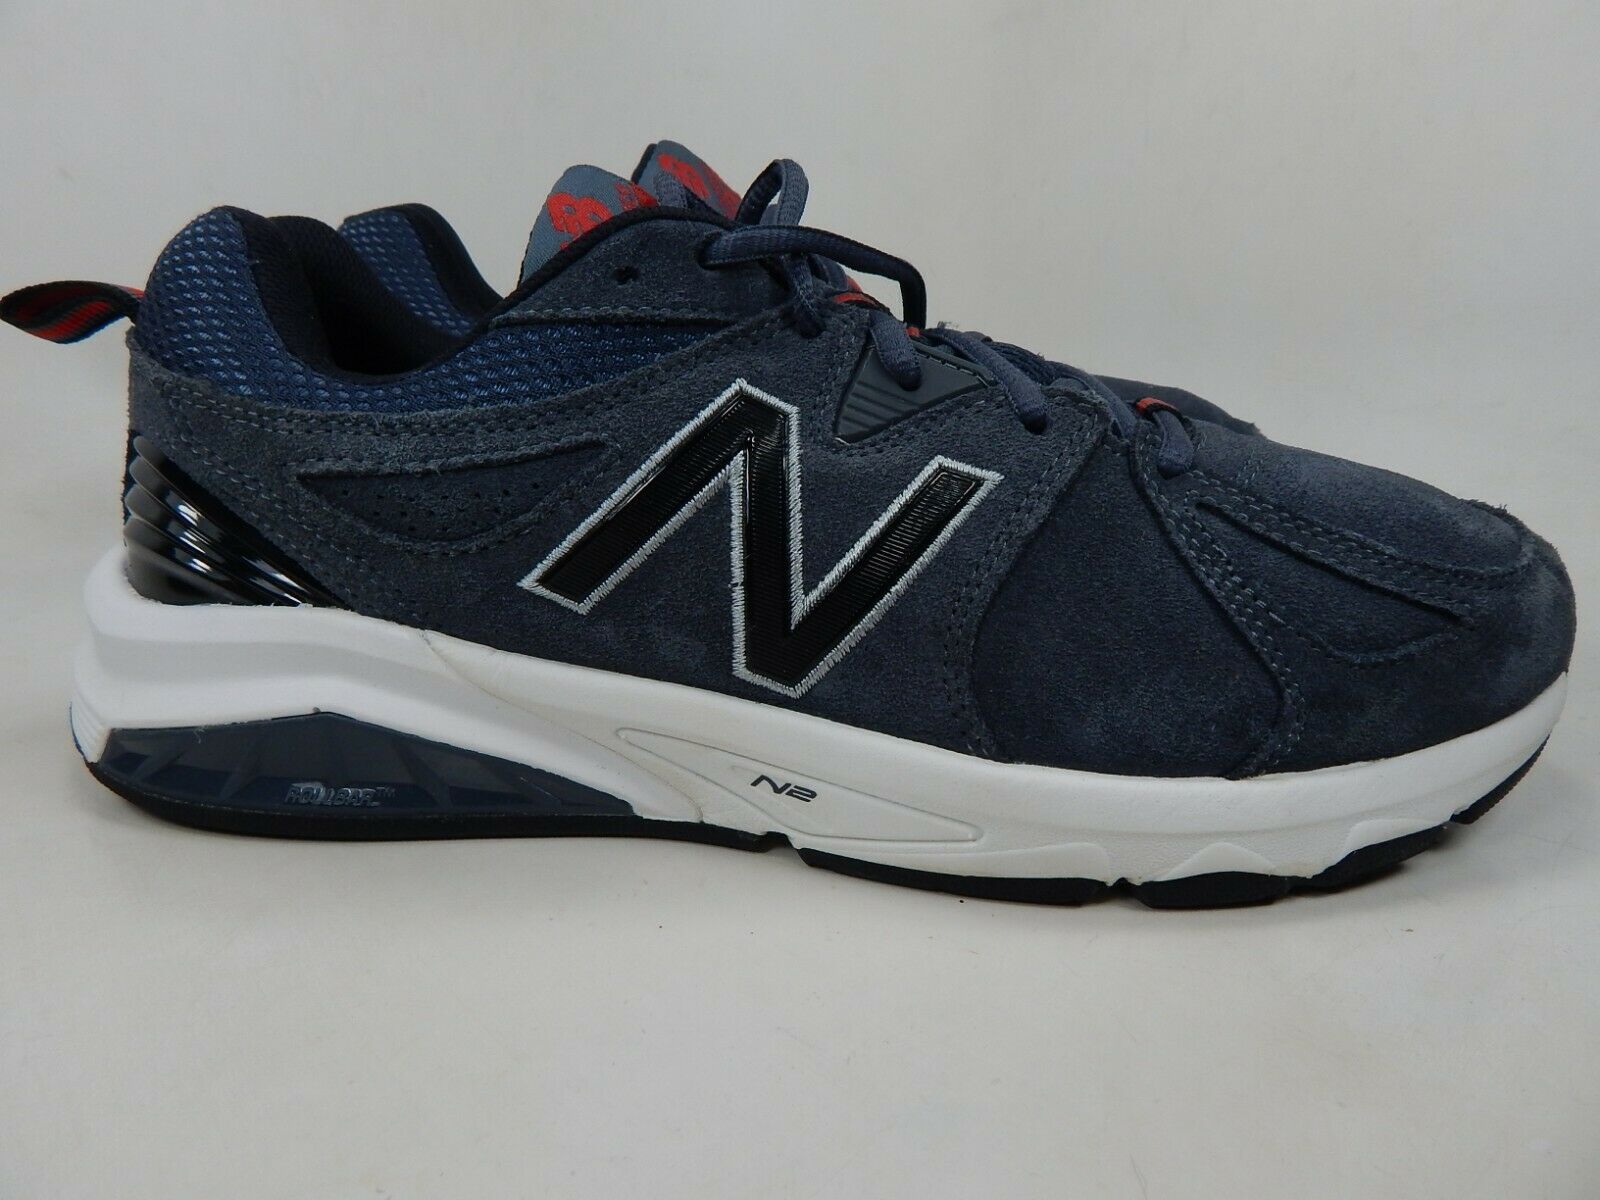 New Balance 857 v2 Size US 9 M (D) EU 42.5 Men's Cross Training Shoes ...